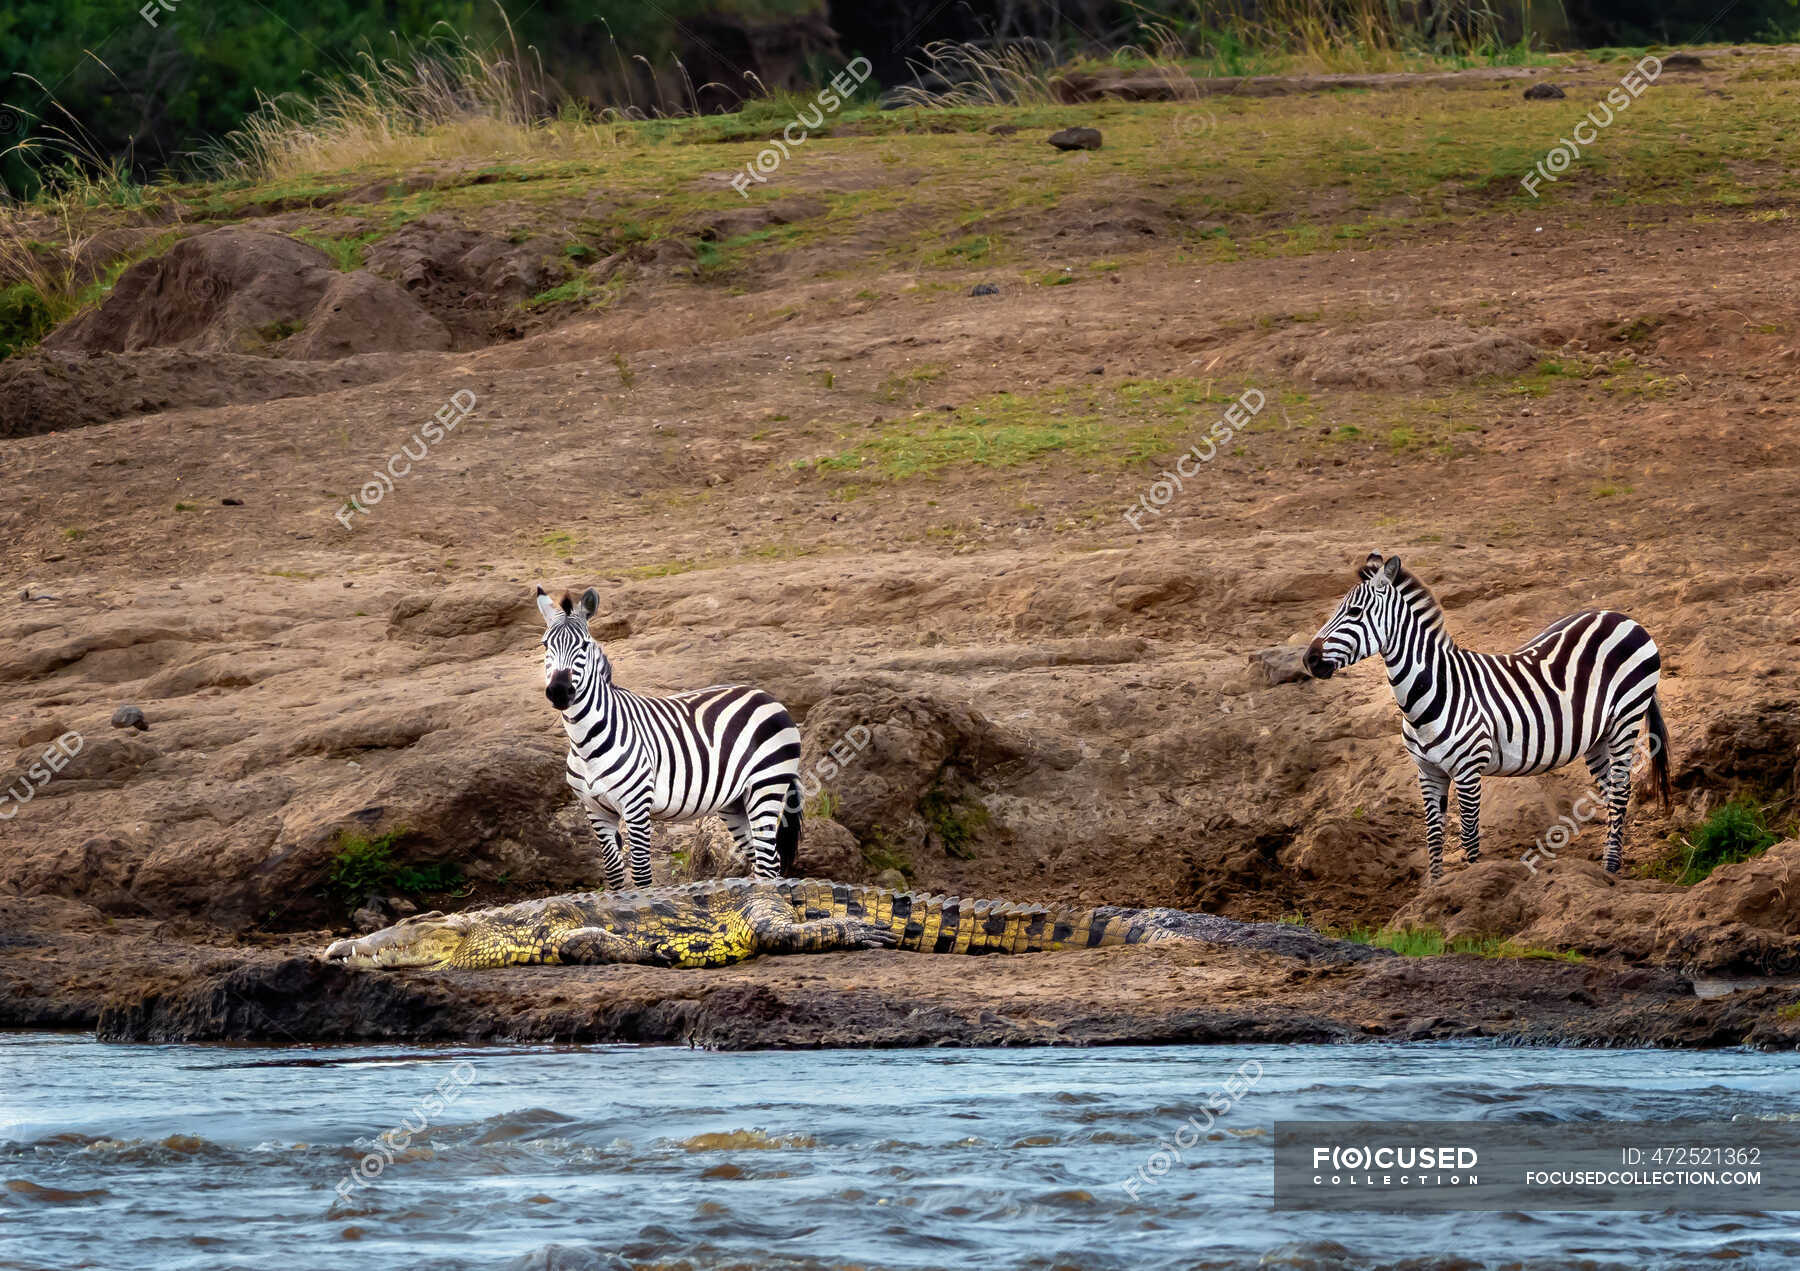 zebras standing next to a Nile crocodile, Kenya — no people, - Stock Photo | #472521362